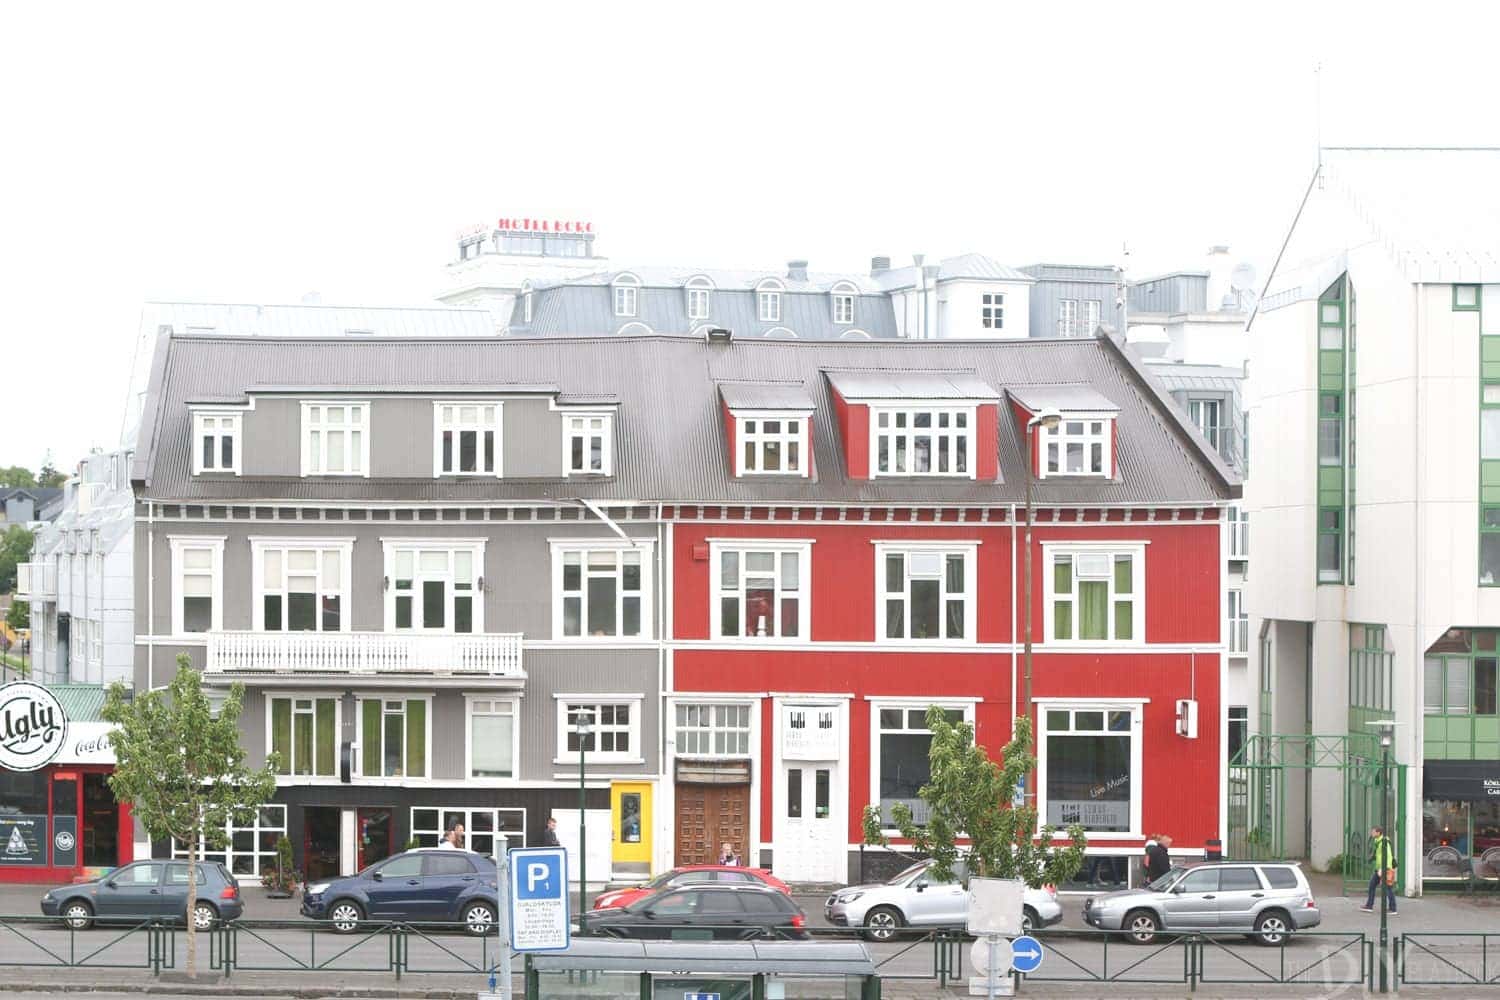 Main Street in downtown Reykjavik